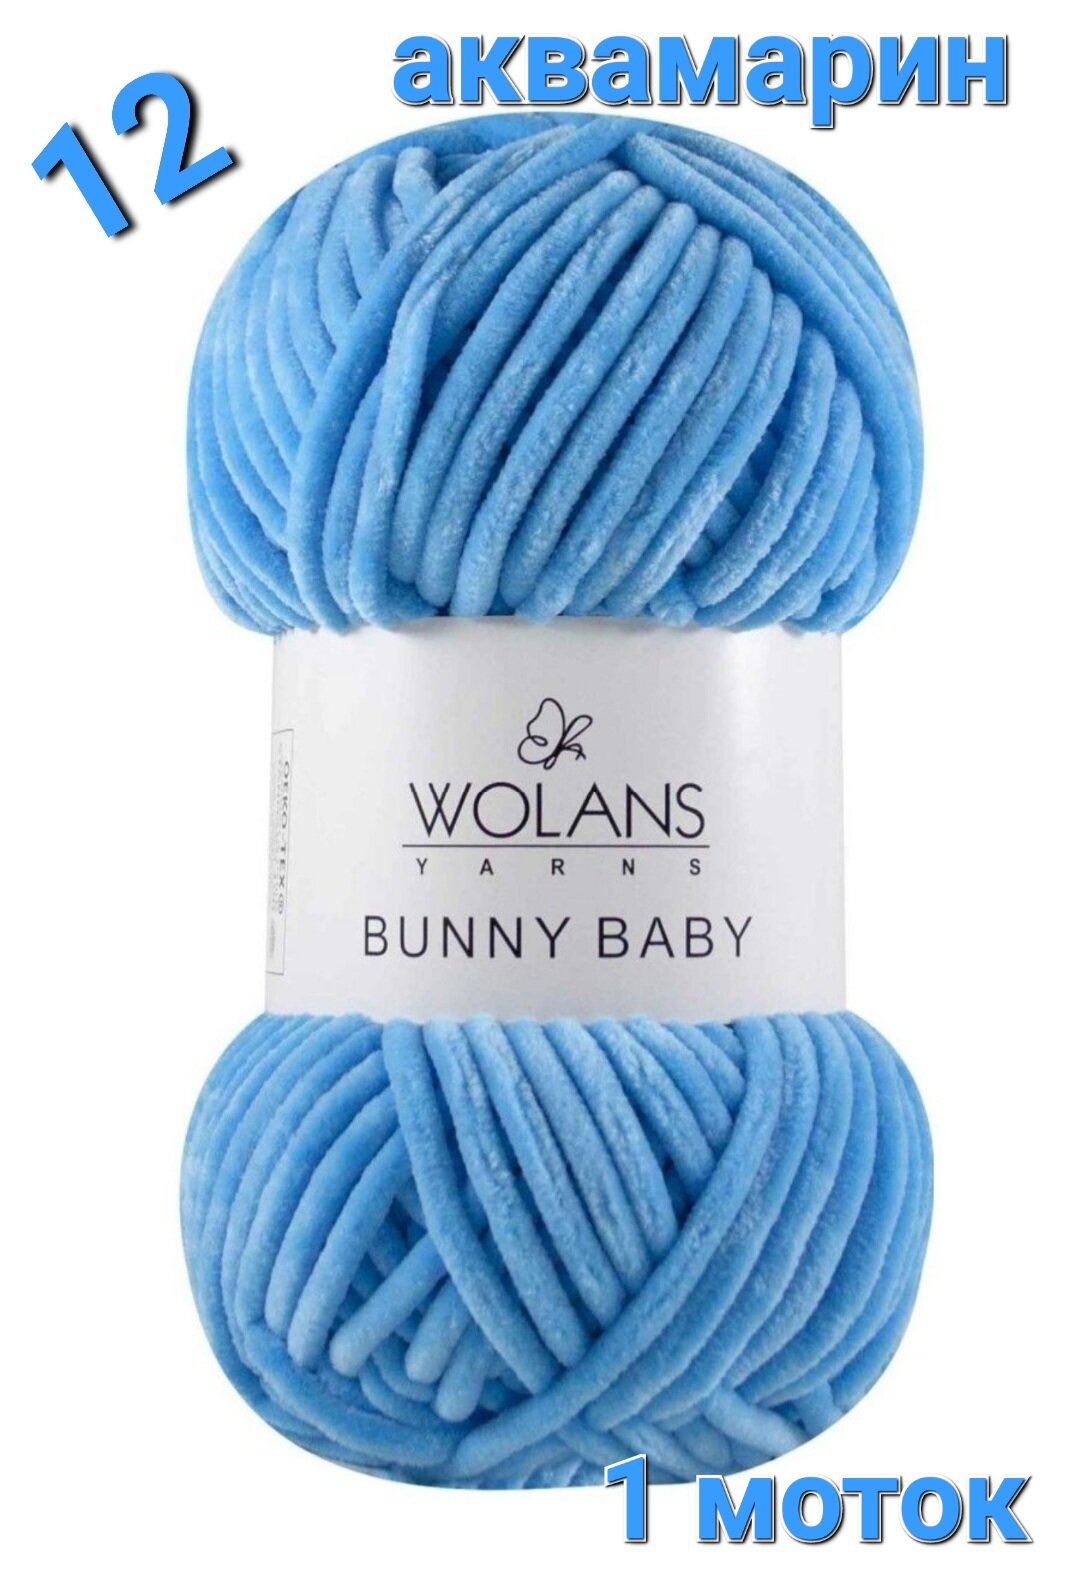 Пряжа Wolans Bunny Baby/ Воланс Банни Беби, 12 (аквамарин), 100гр, 120м, 1 моток